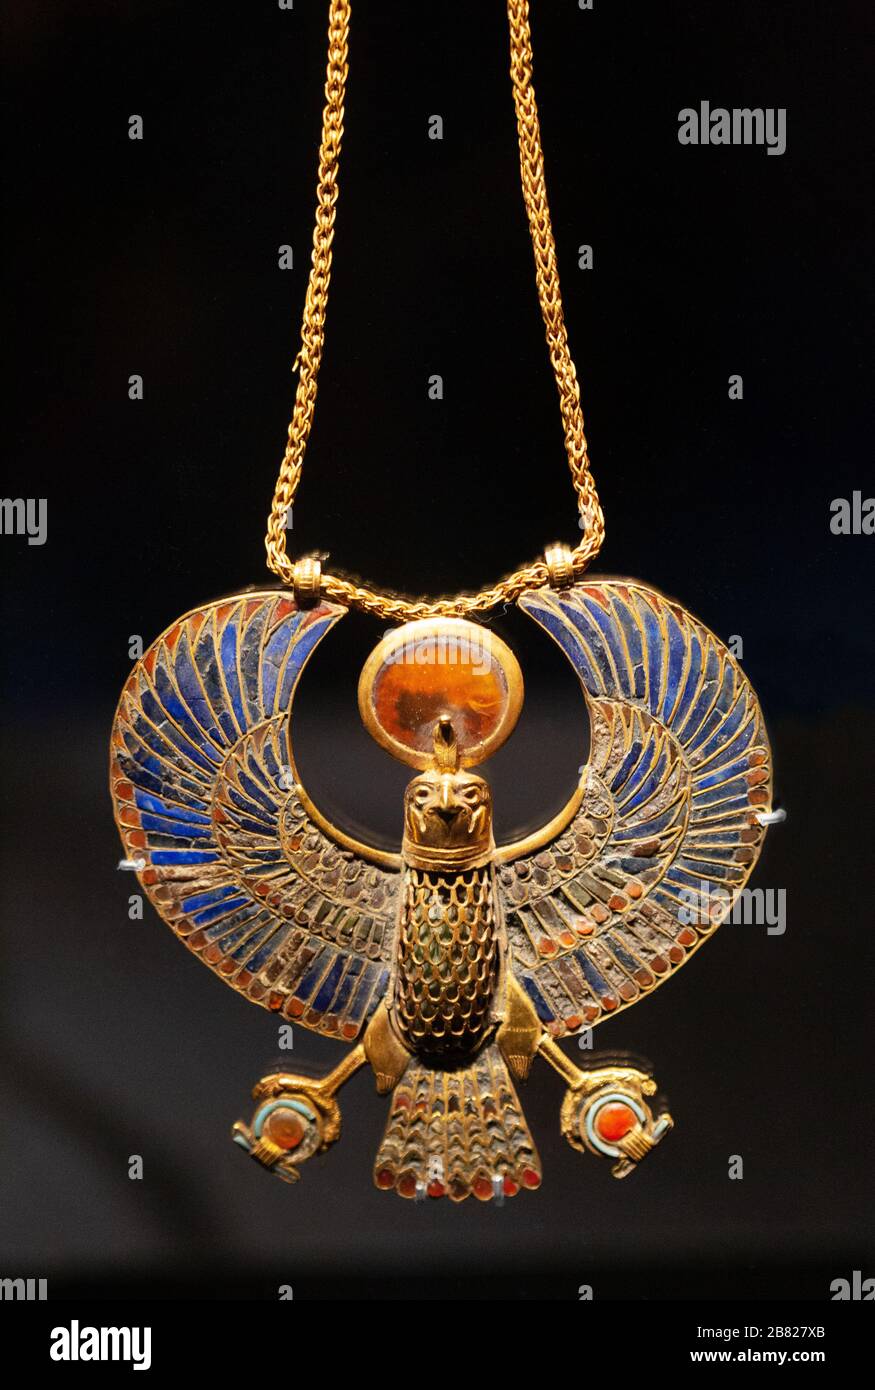 Tutankhamun treasures; Gold inlaid falcon chest pendant with gold chain jewellery from Tutankhamuns tomb, ancient Egyptian history Stock Photo